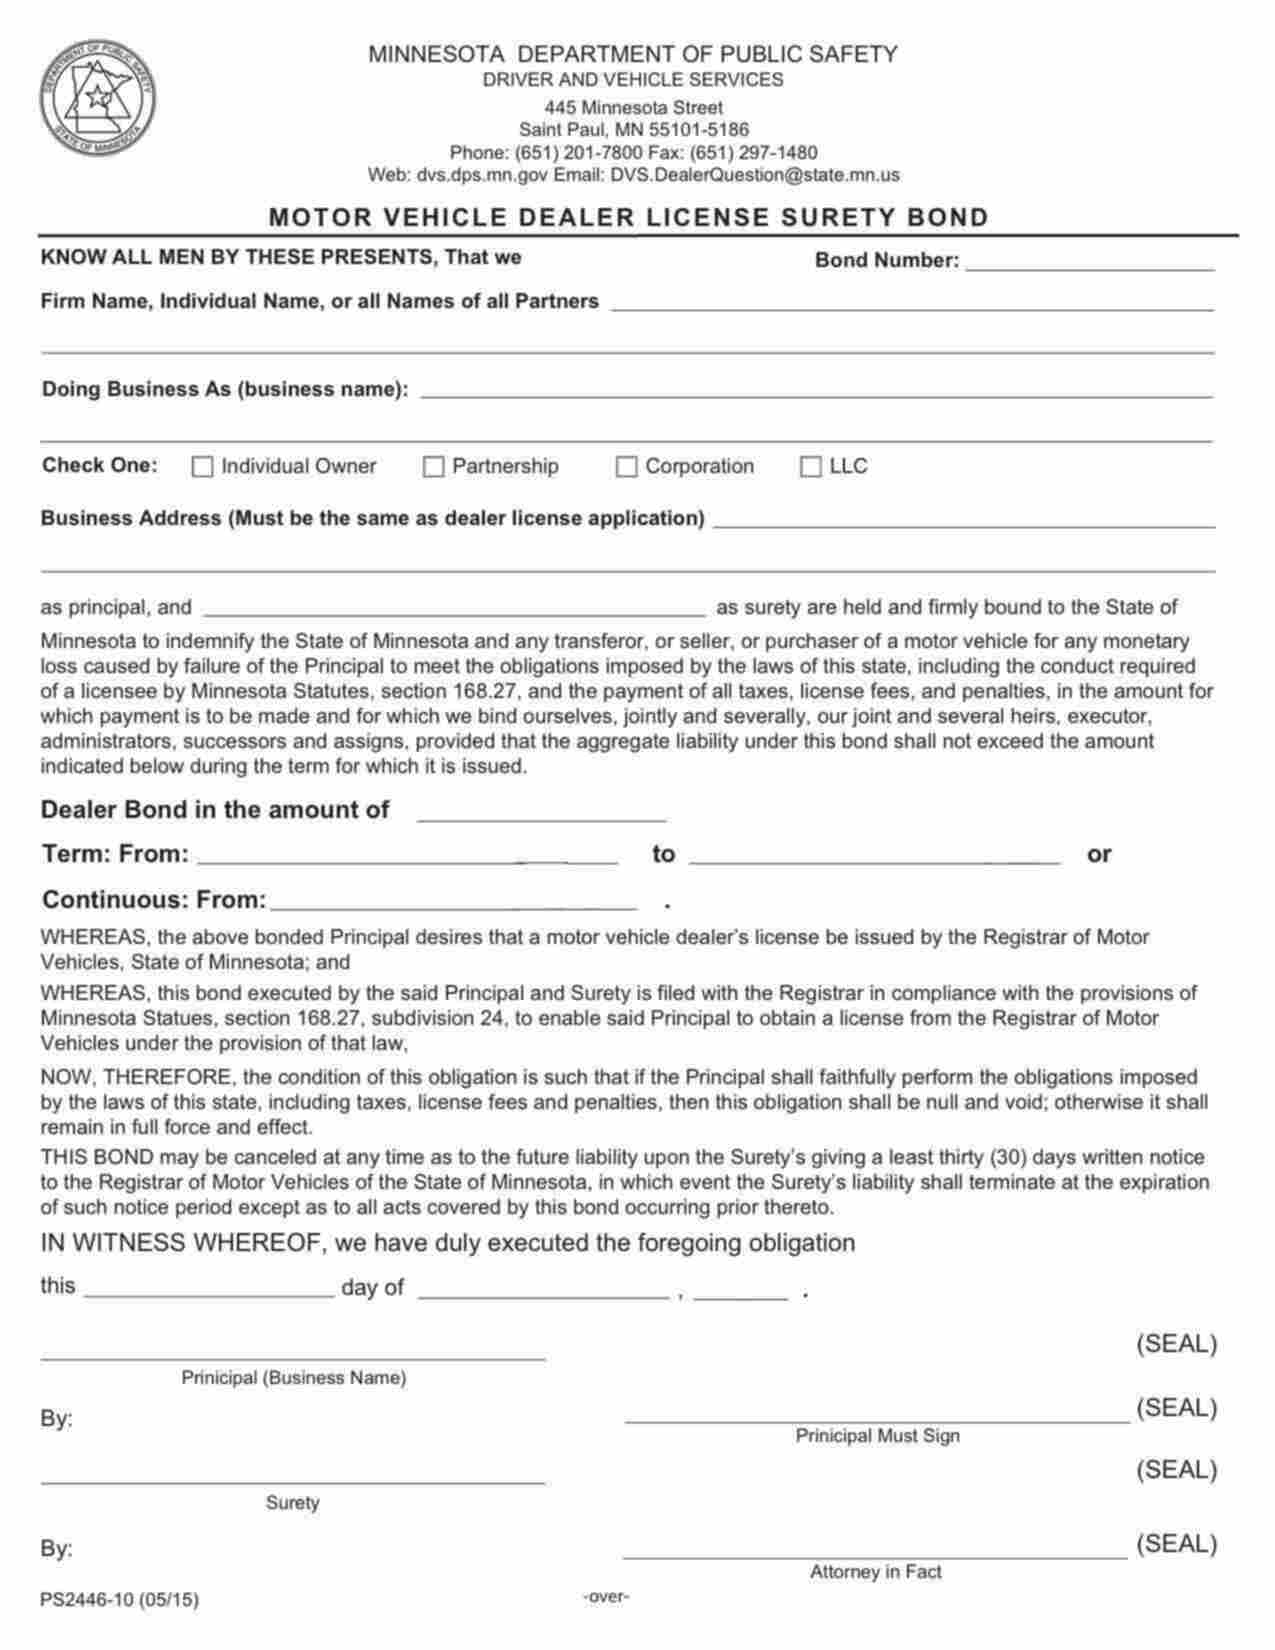 Minnesota Motor Vehicle Dealer - Individual Bond Form